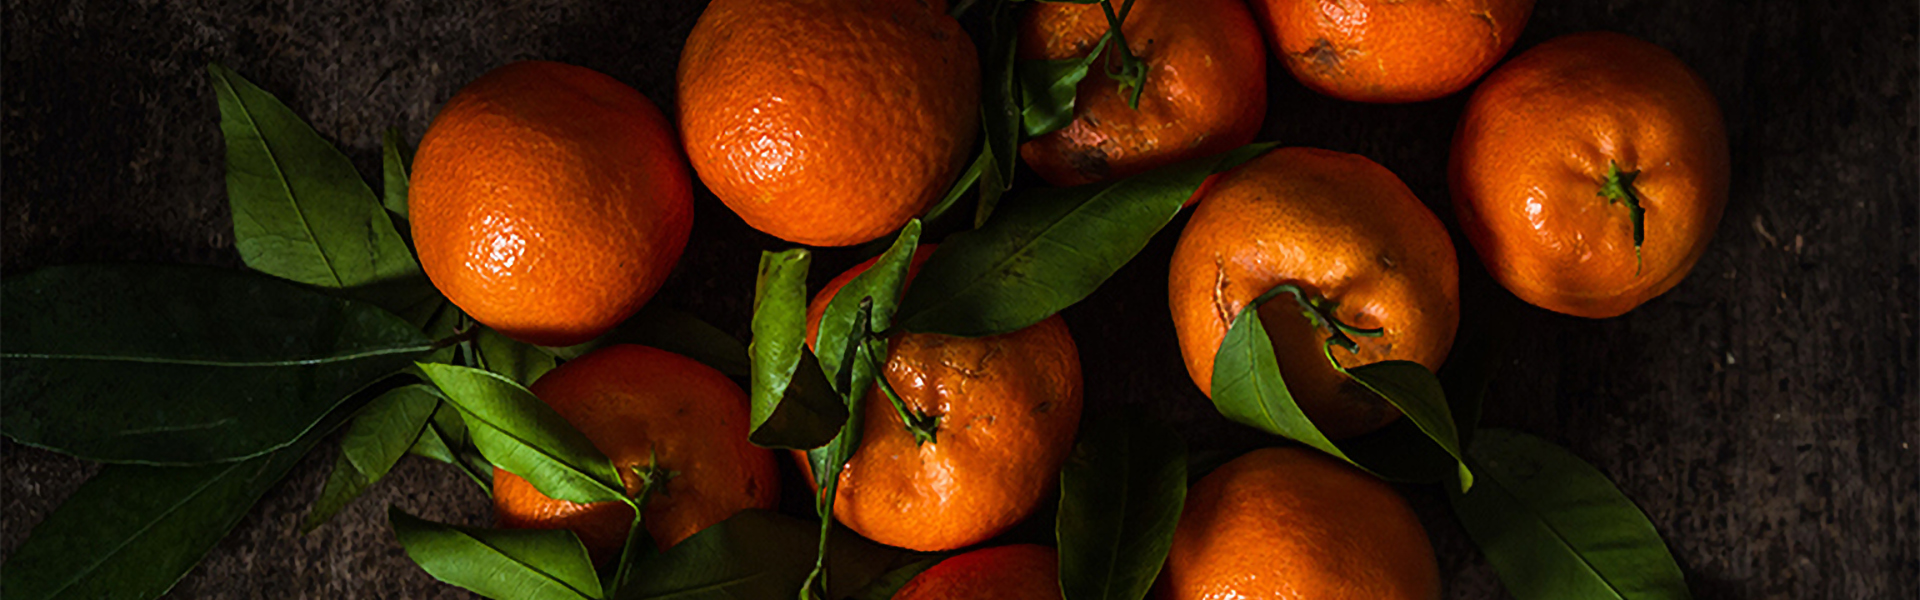 Know Your Food: Mandarin